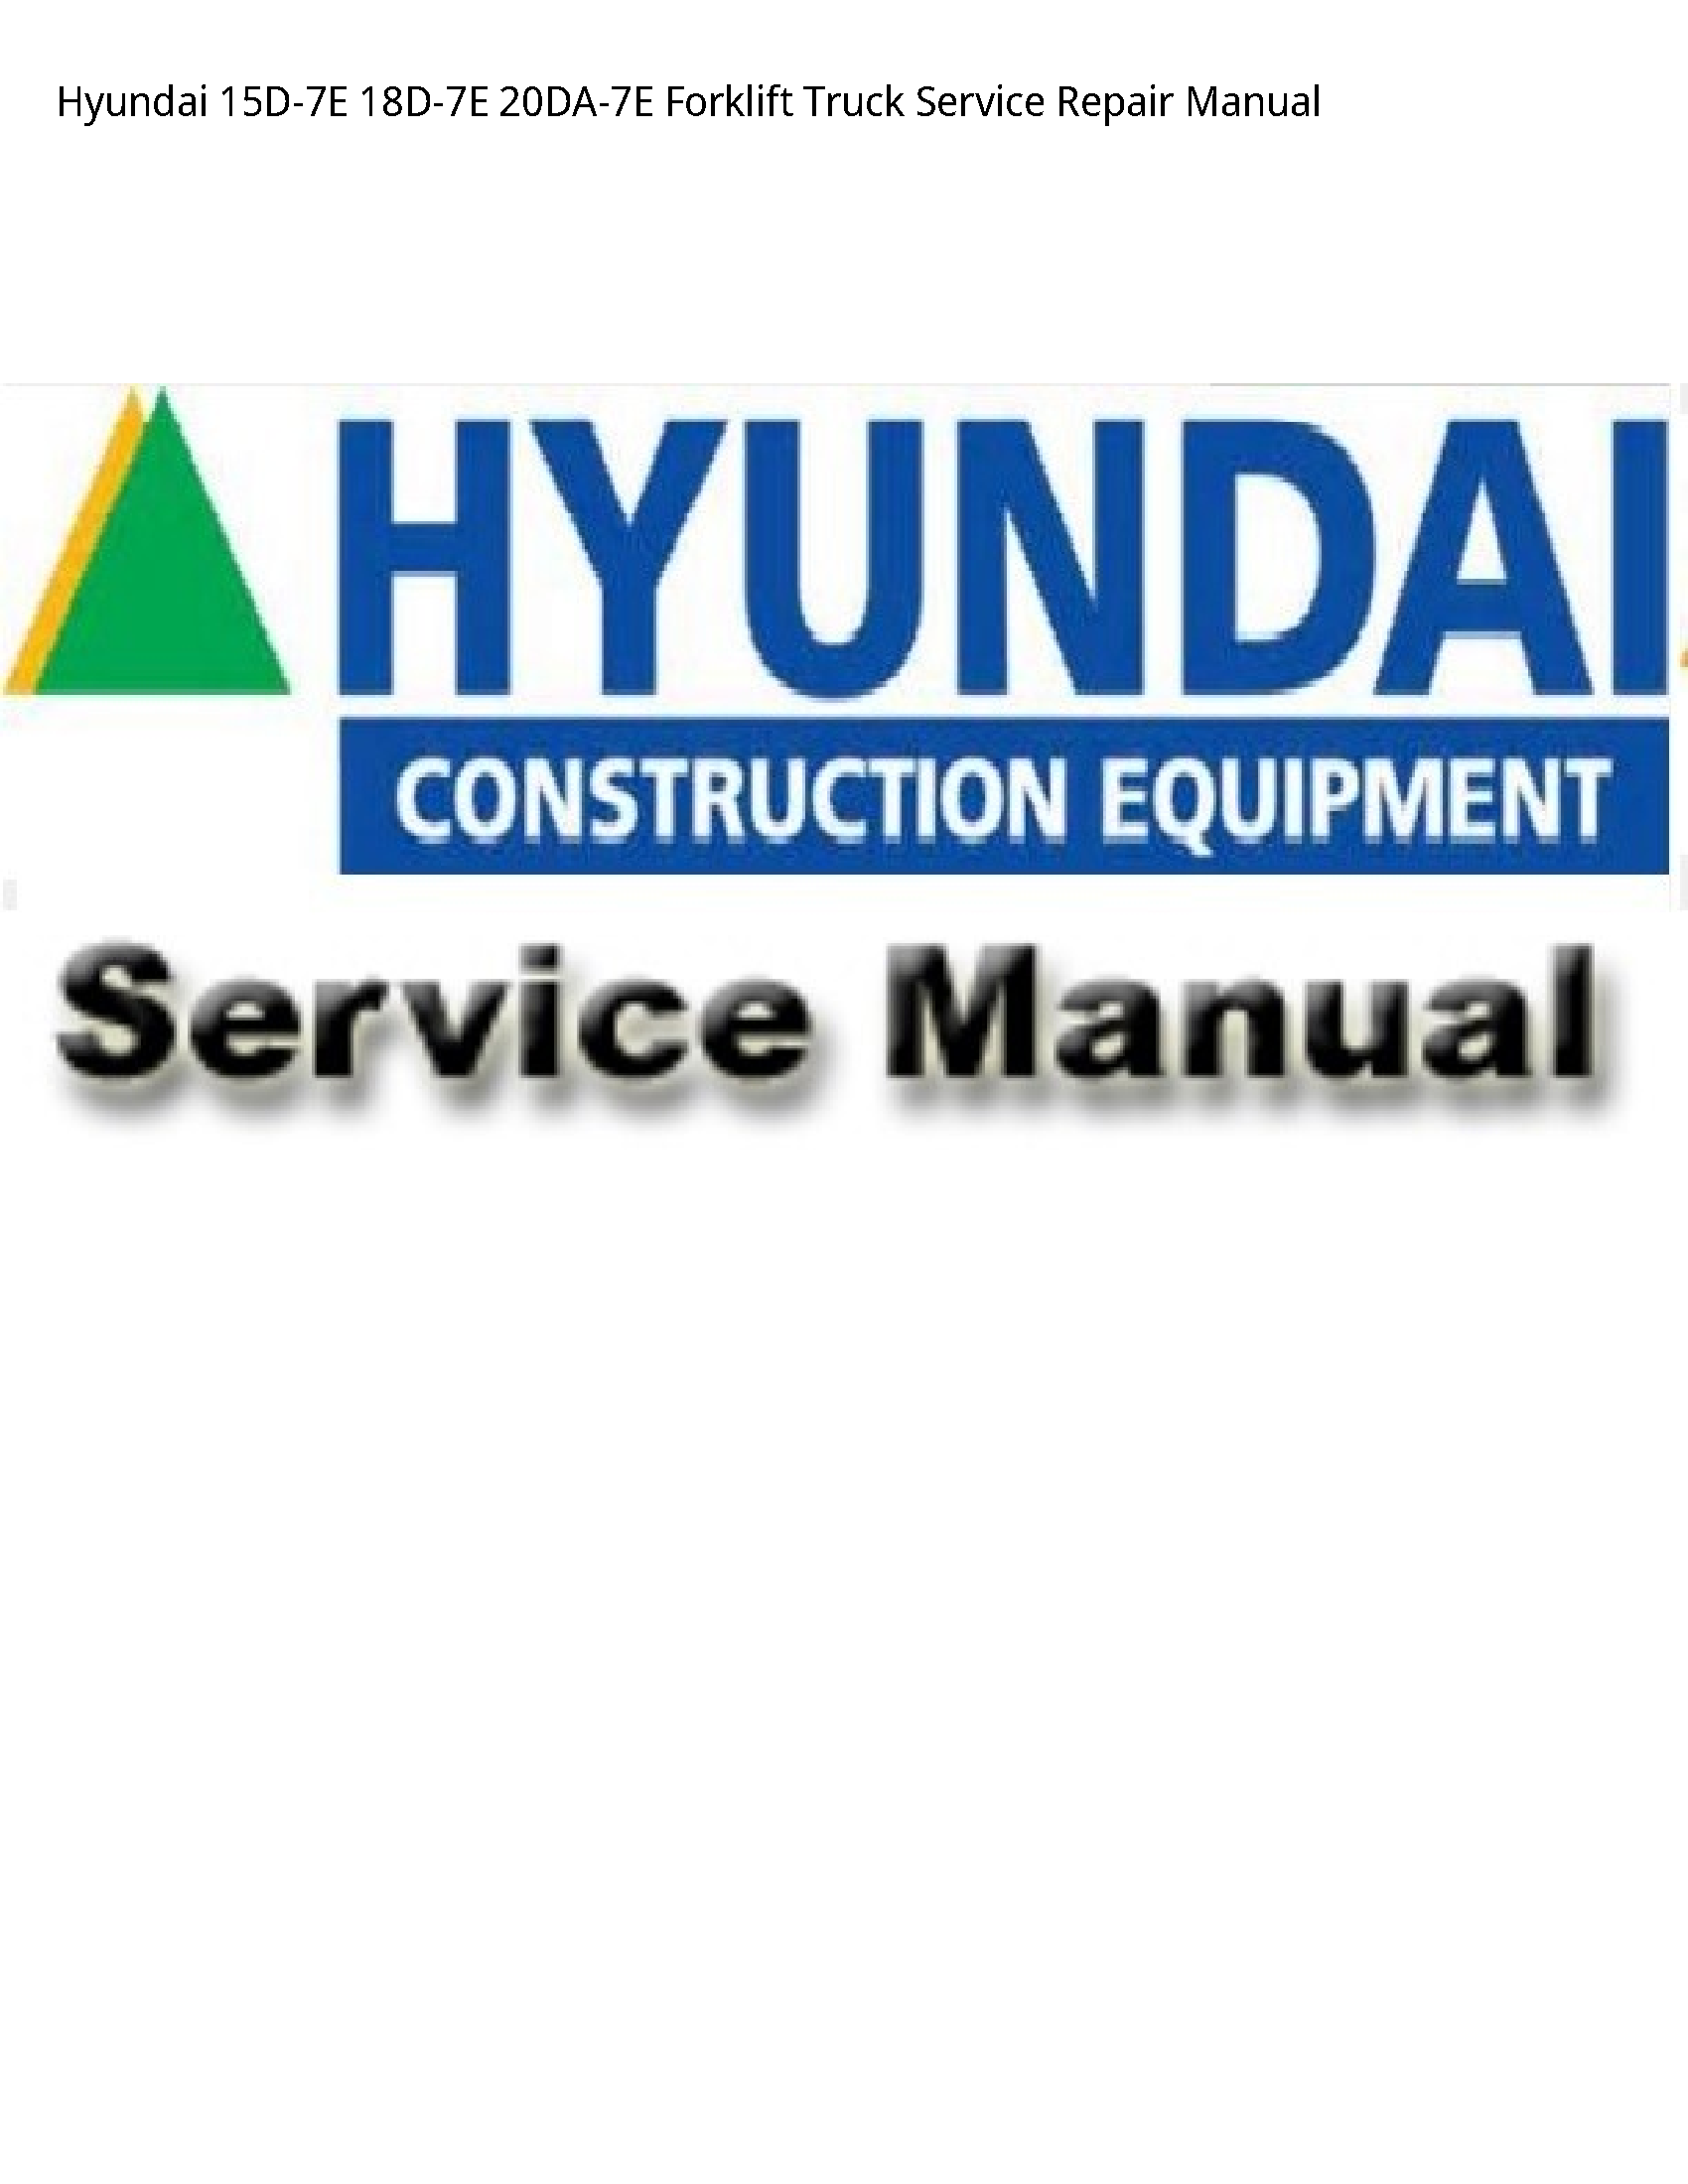 Hyundai 15D-7E Forklift Truck manual